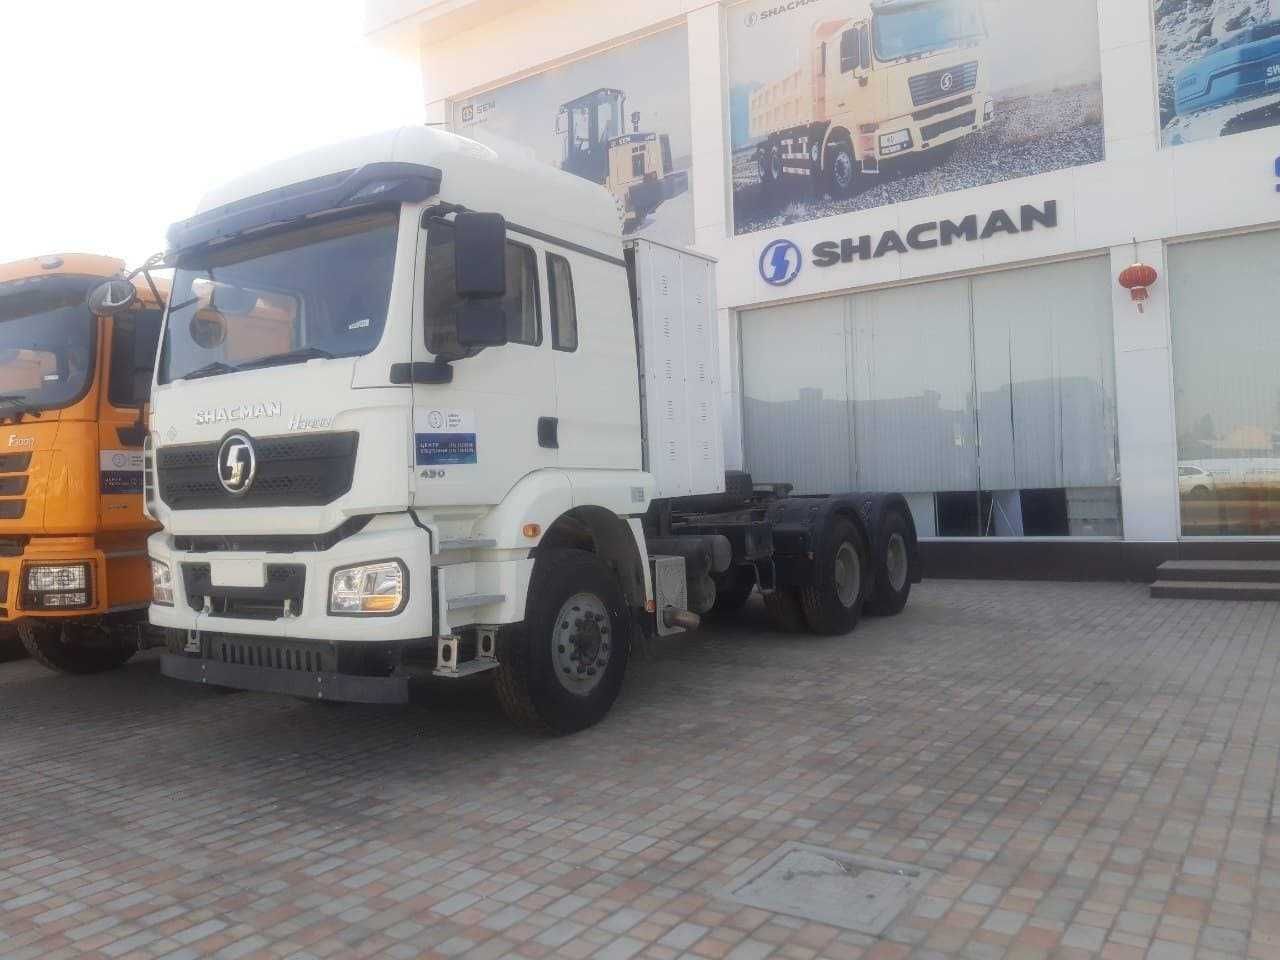 Газовый тягач SHACMAN Н3000 метан CNG грузовик китайский